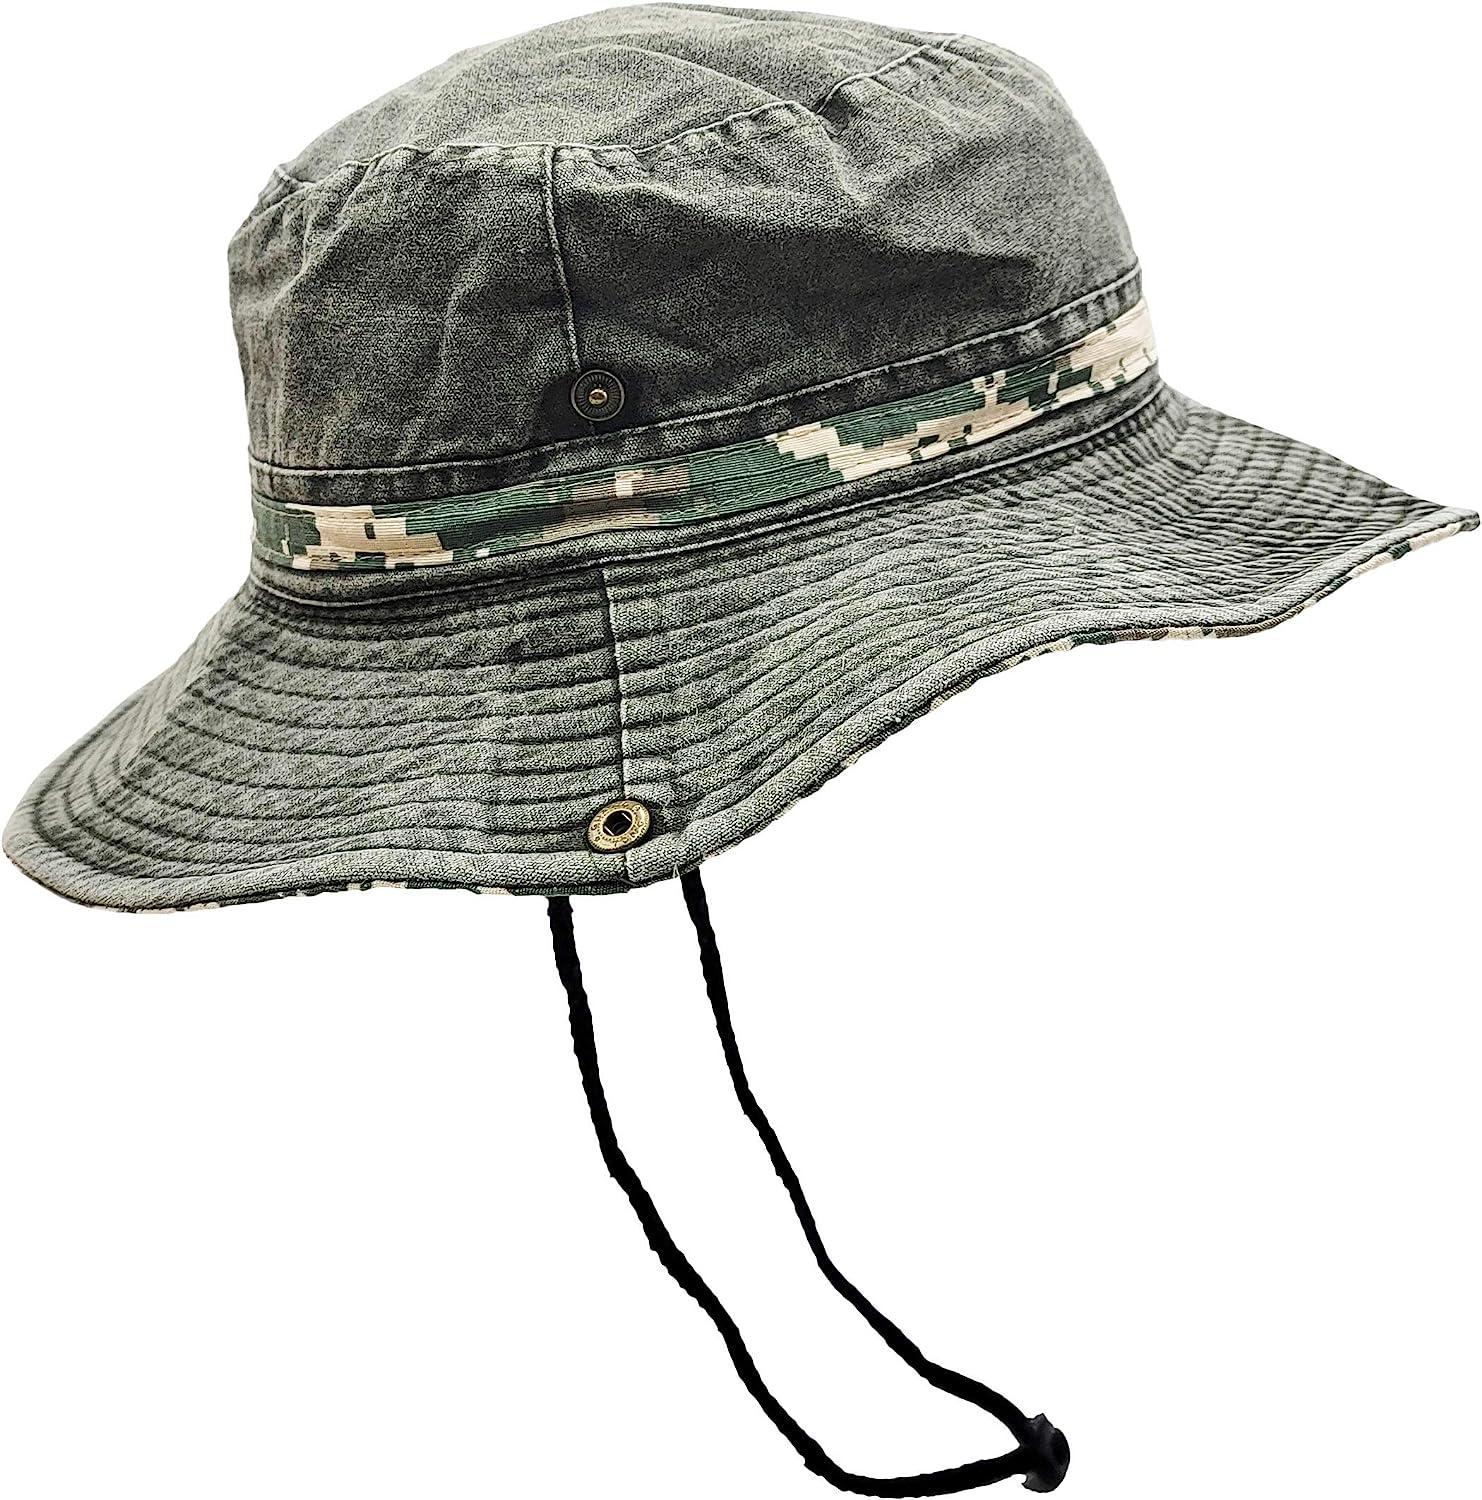 Camping Jungle Hat Men's Bucket Hats Military Boonie Hat Fishing Cap Sun Hat